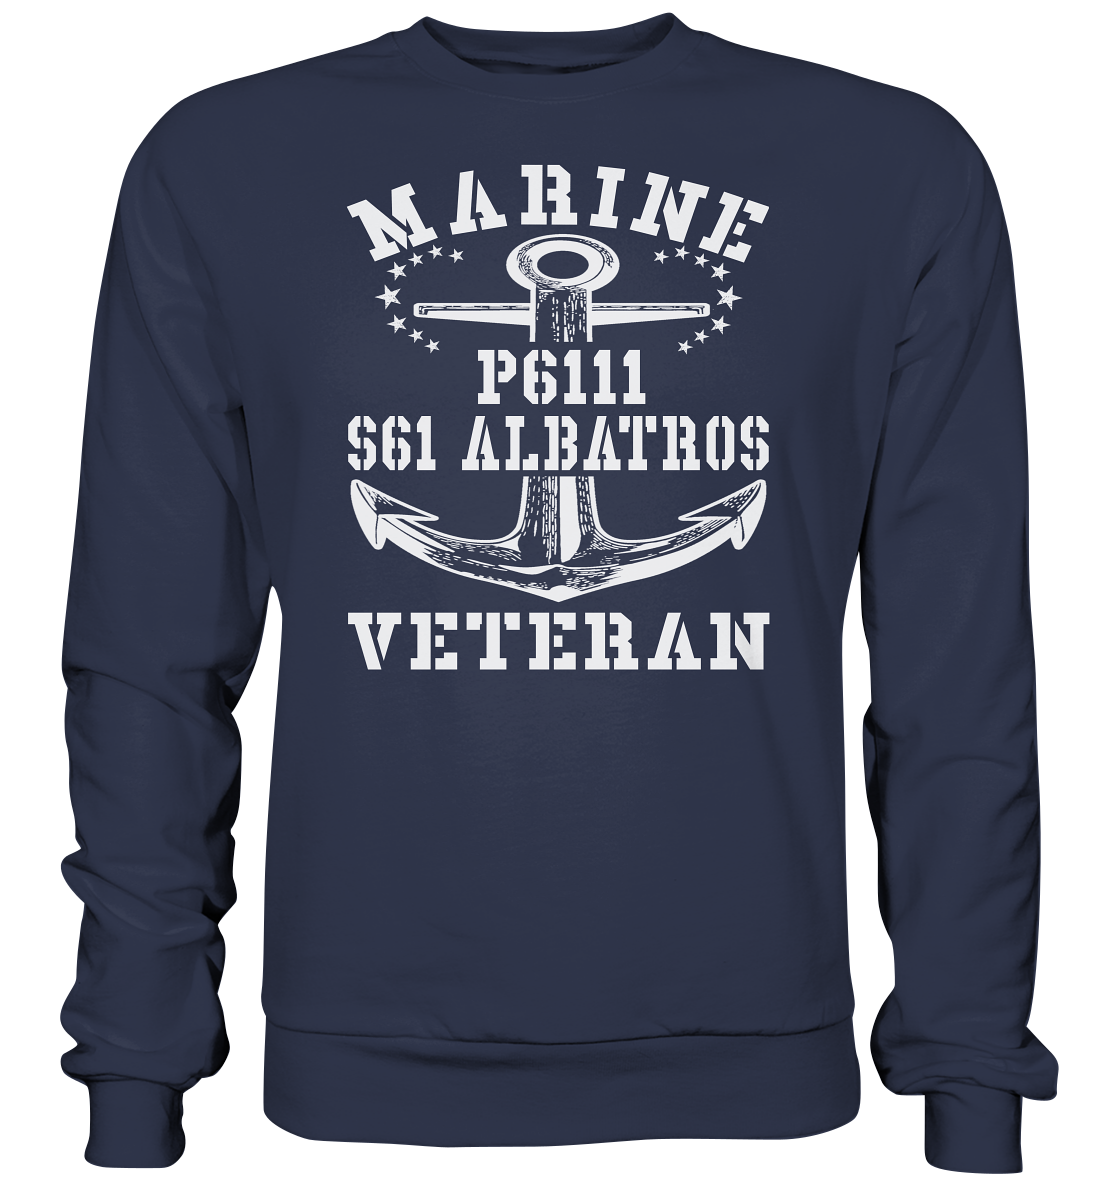 FK-Schnellboot P6111 ALBATROS Marine Veteran - Premium Sweatshirt